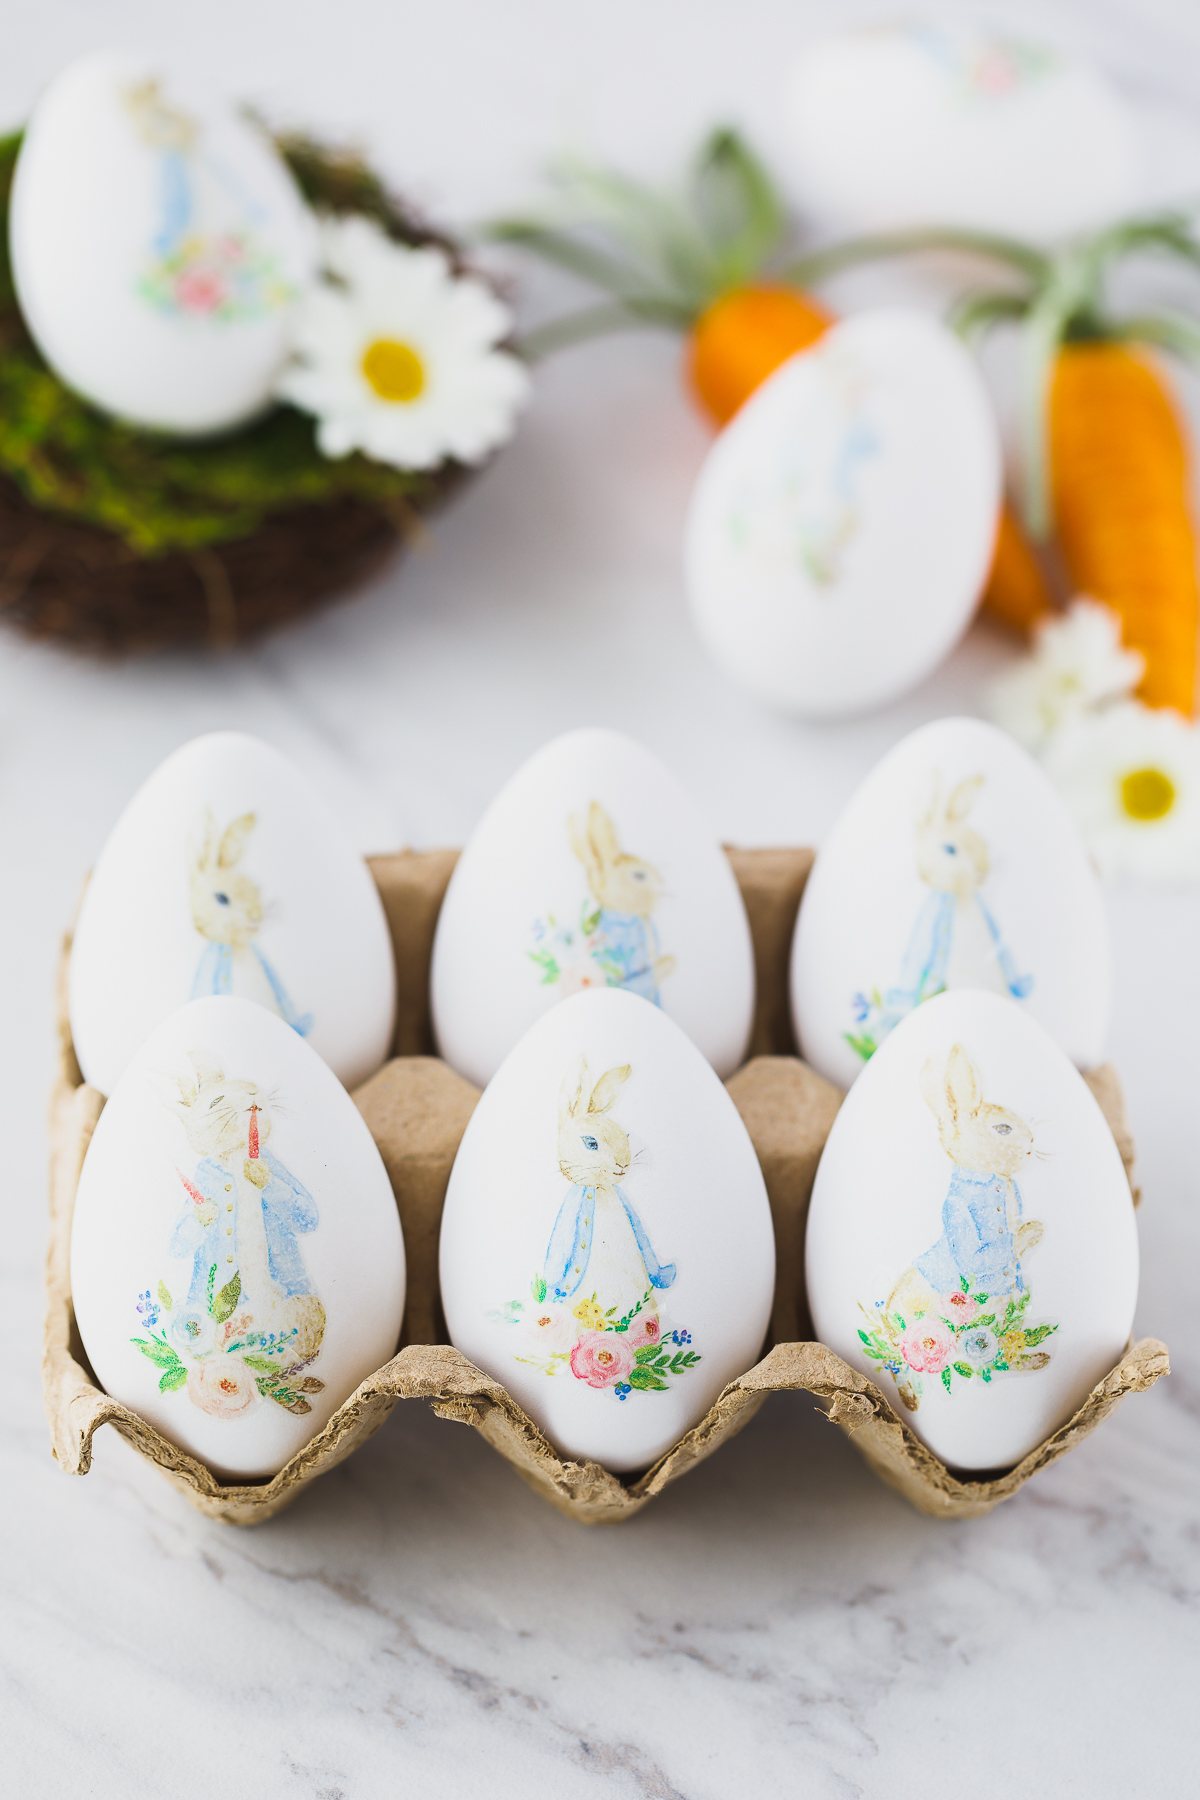 watercolor Easter eggs